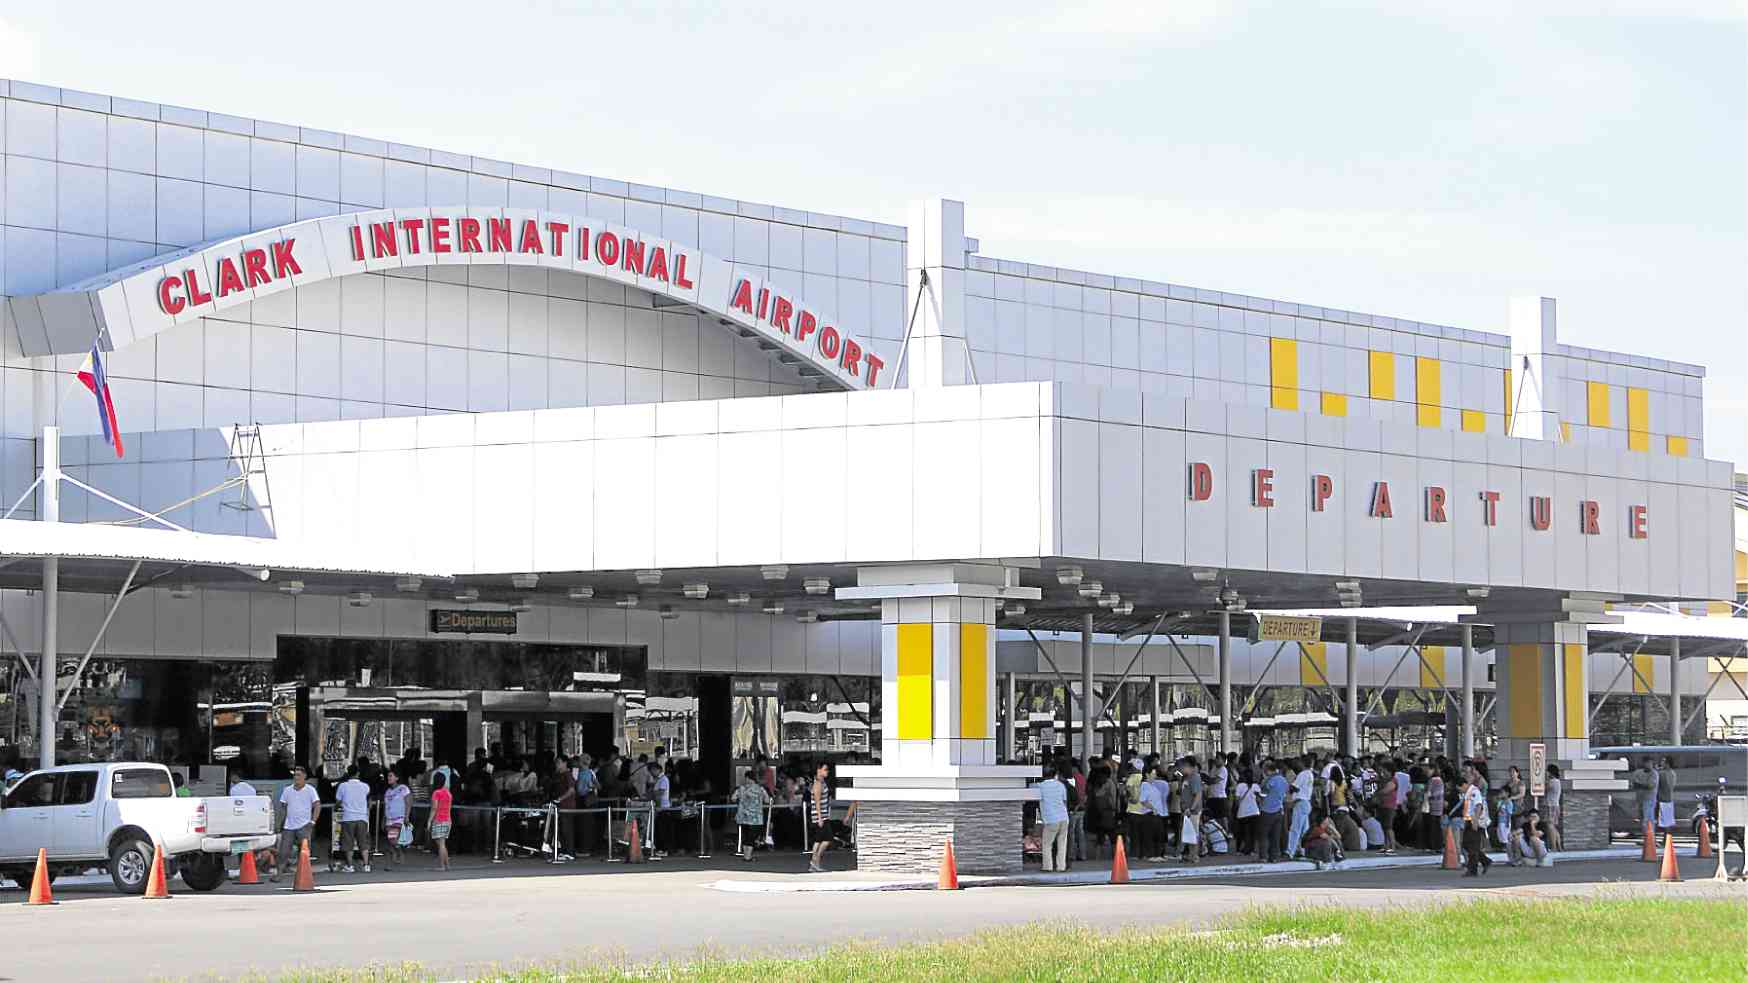 clark international airport careers